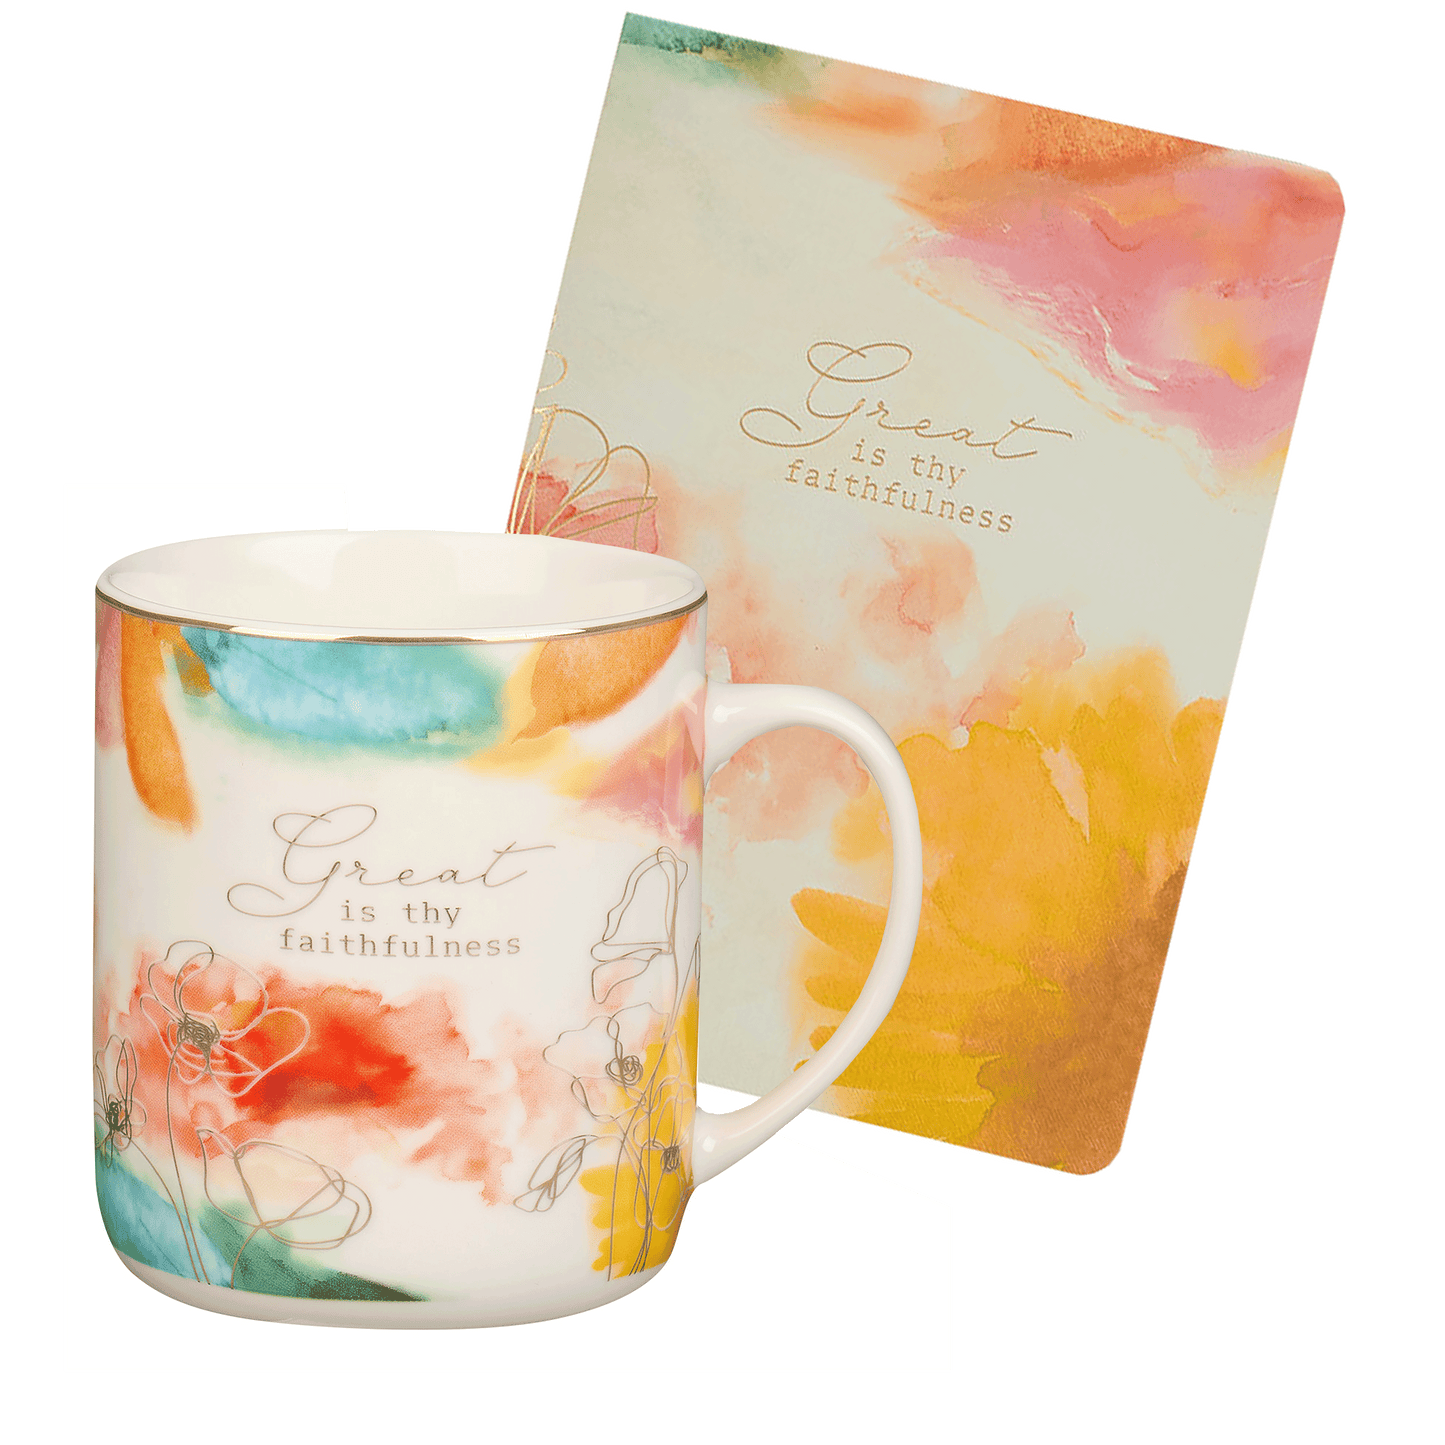 Great is Thy Faithfulness Mug & Notebook Set